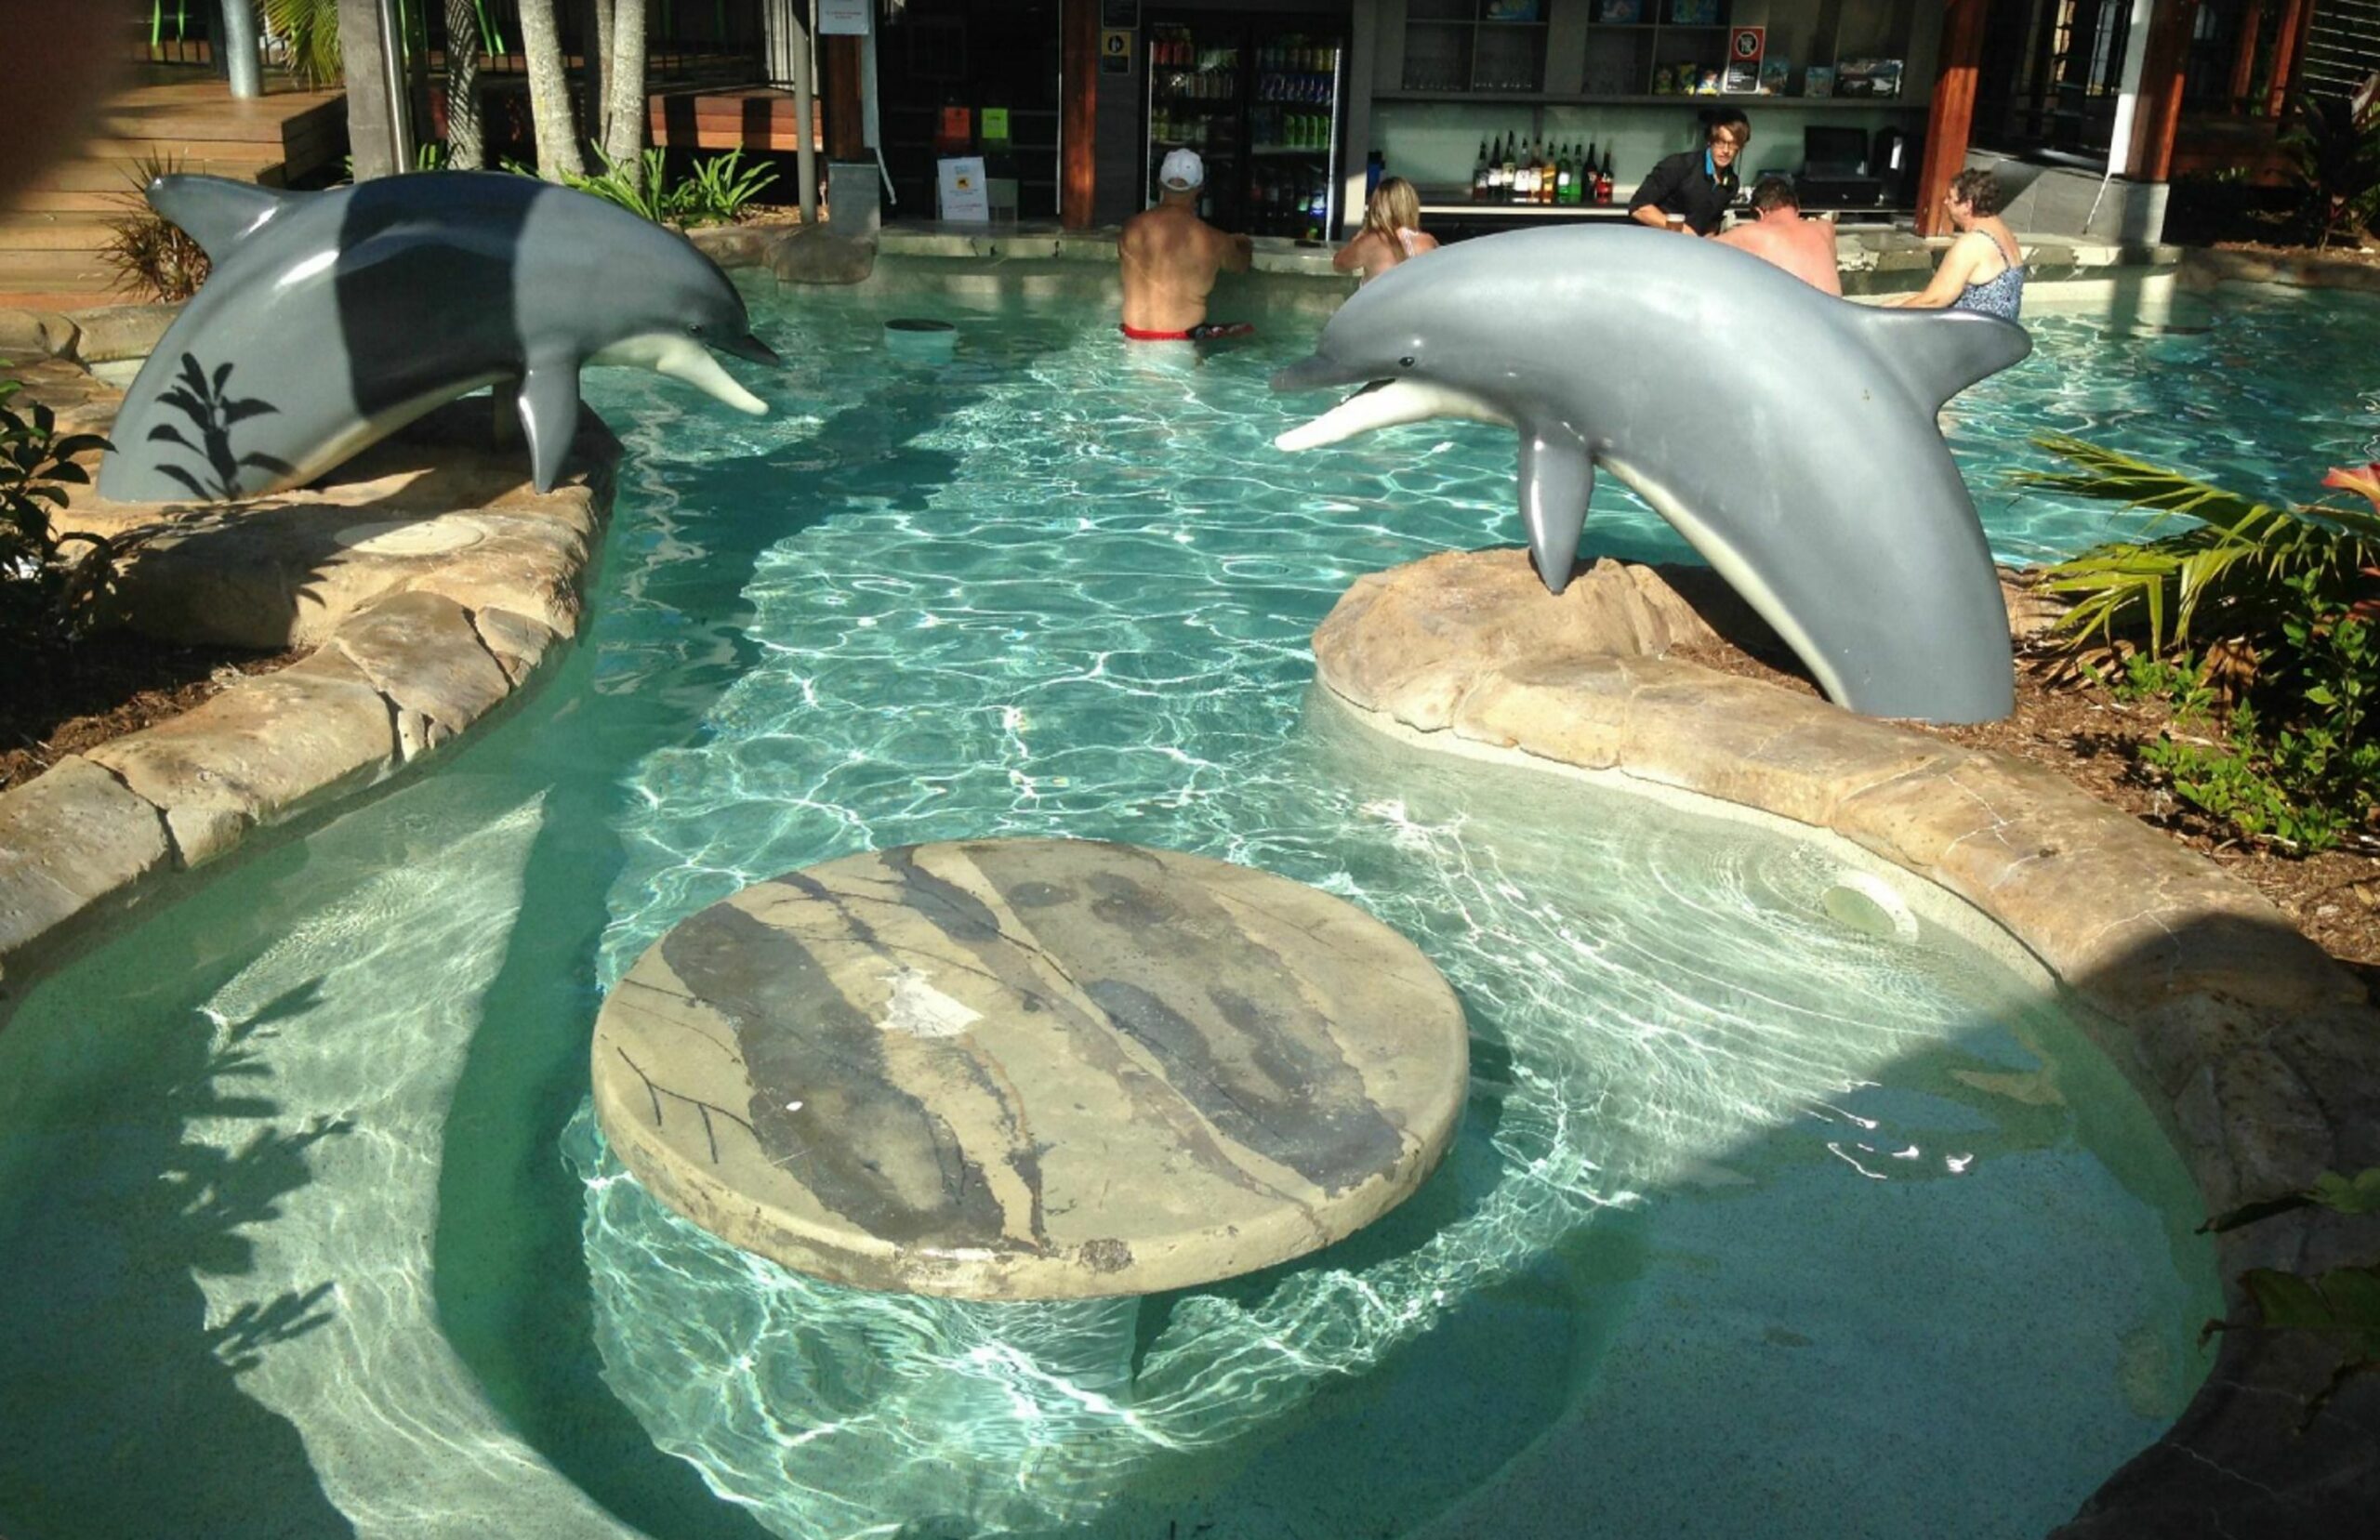 Blue Dolphin Holiday Resort